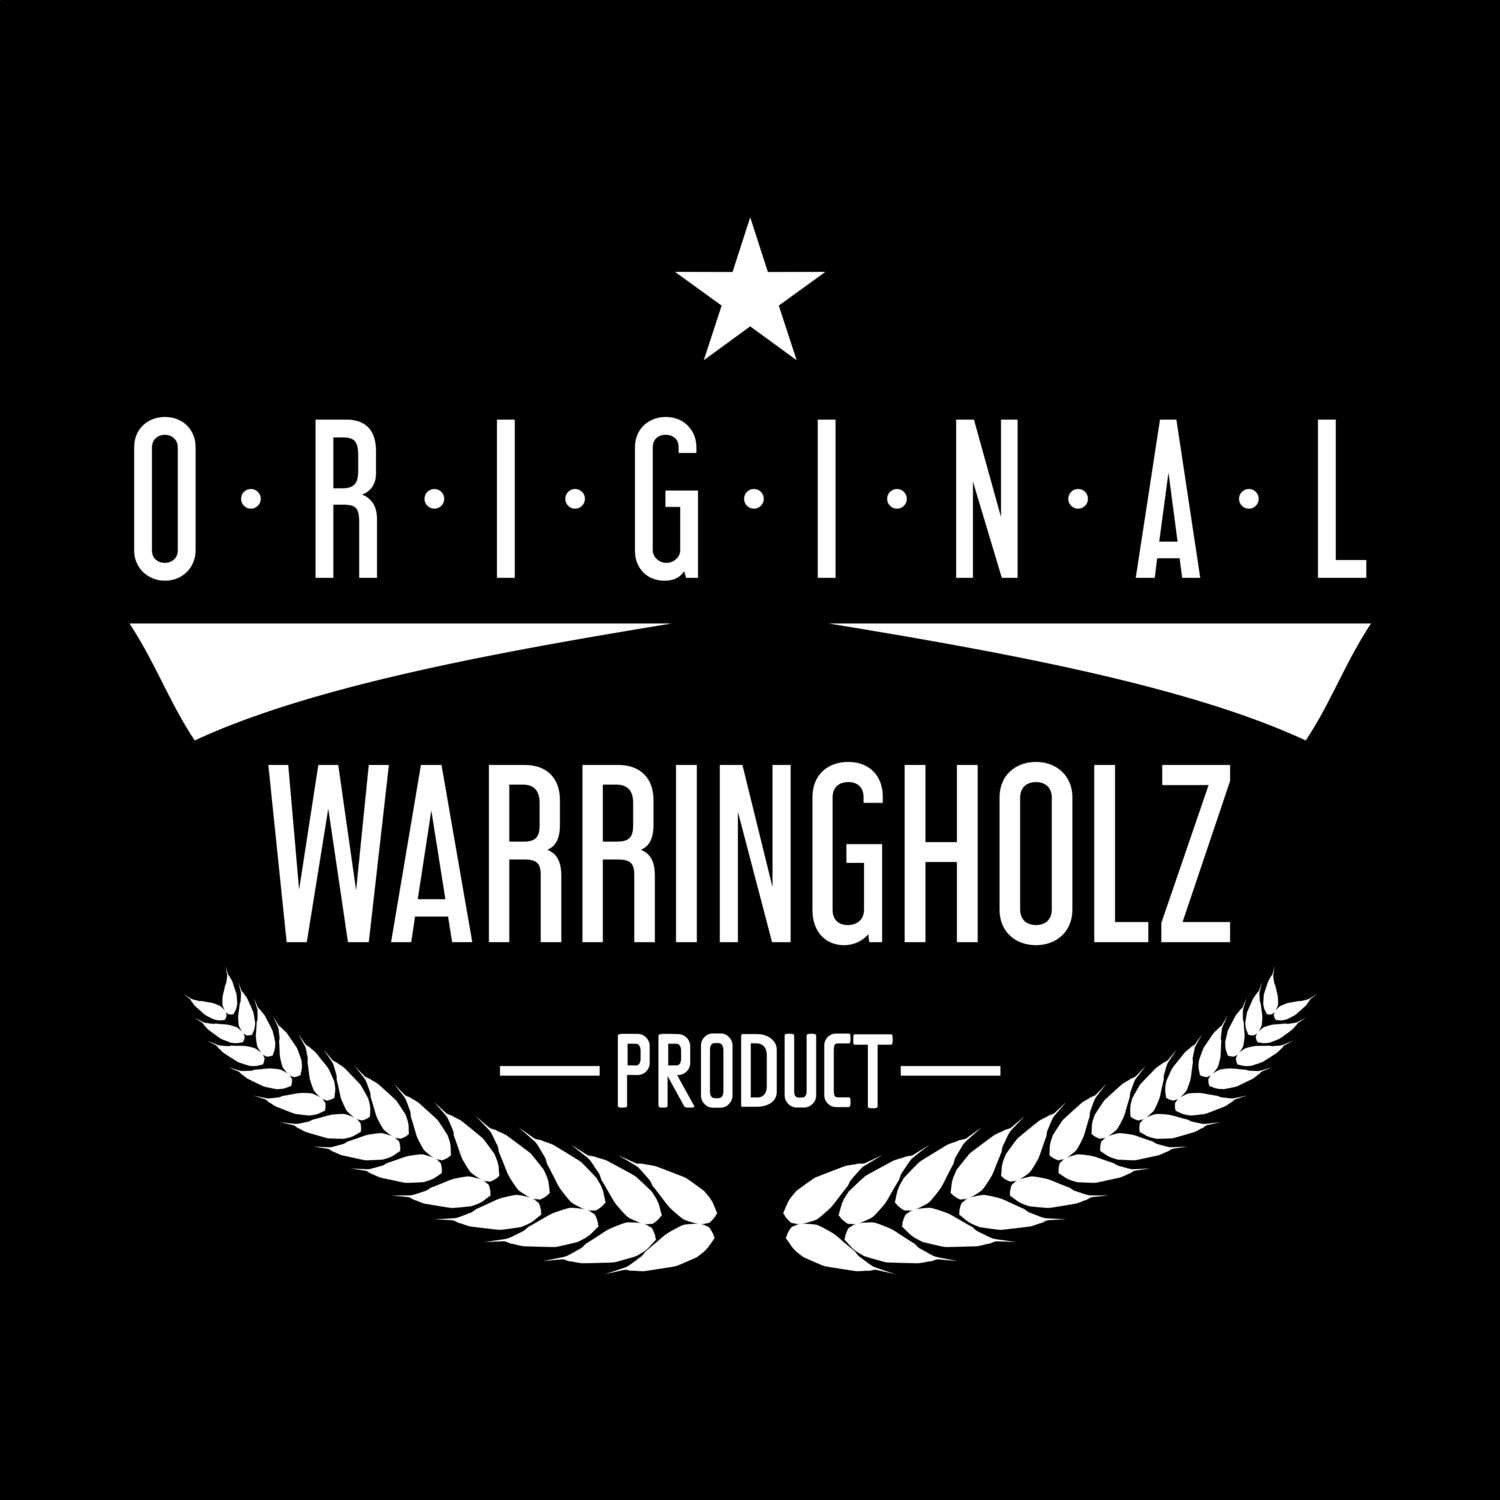 Warringholz T-Shirt »Original Product«